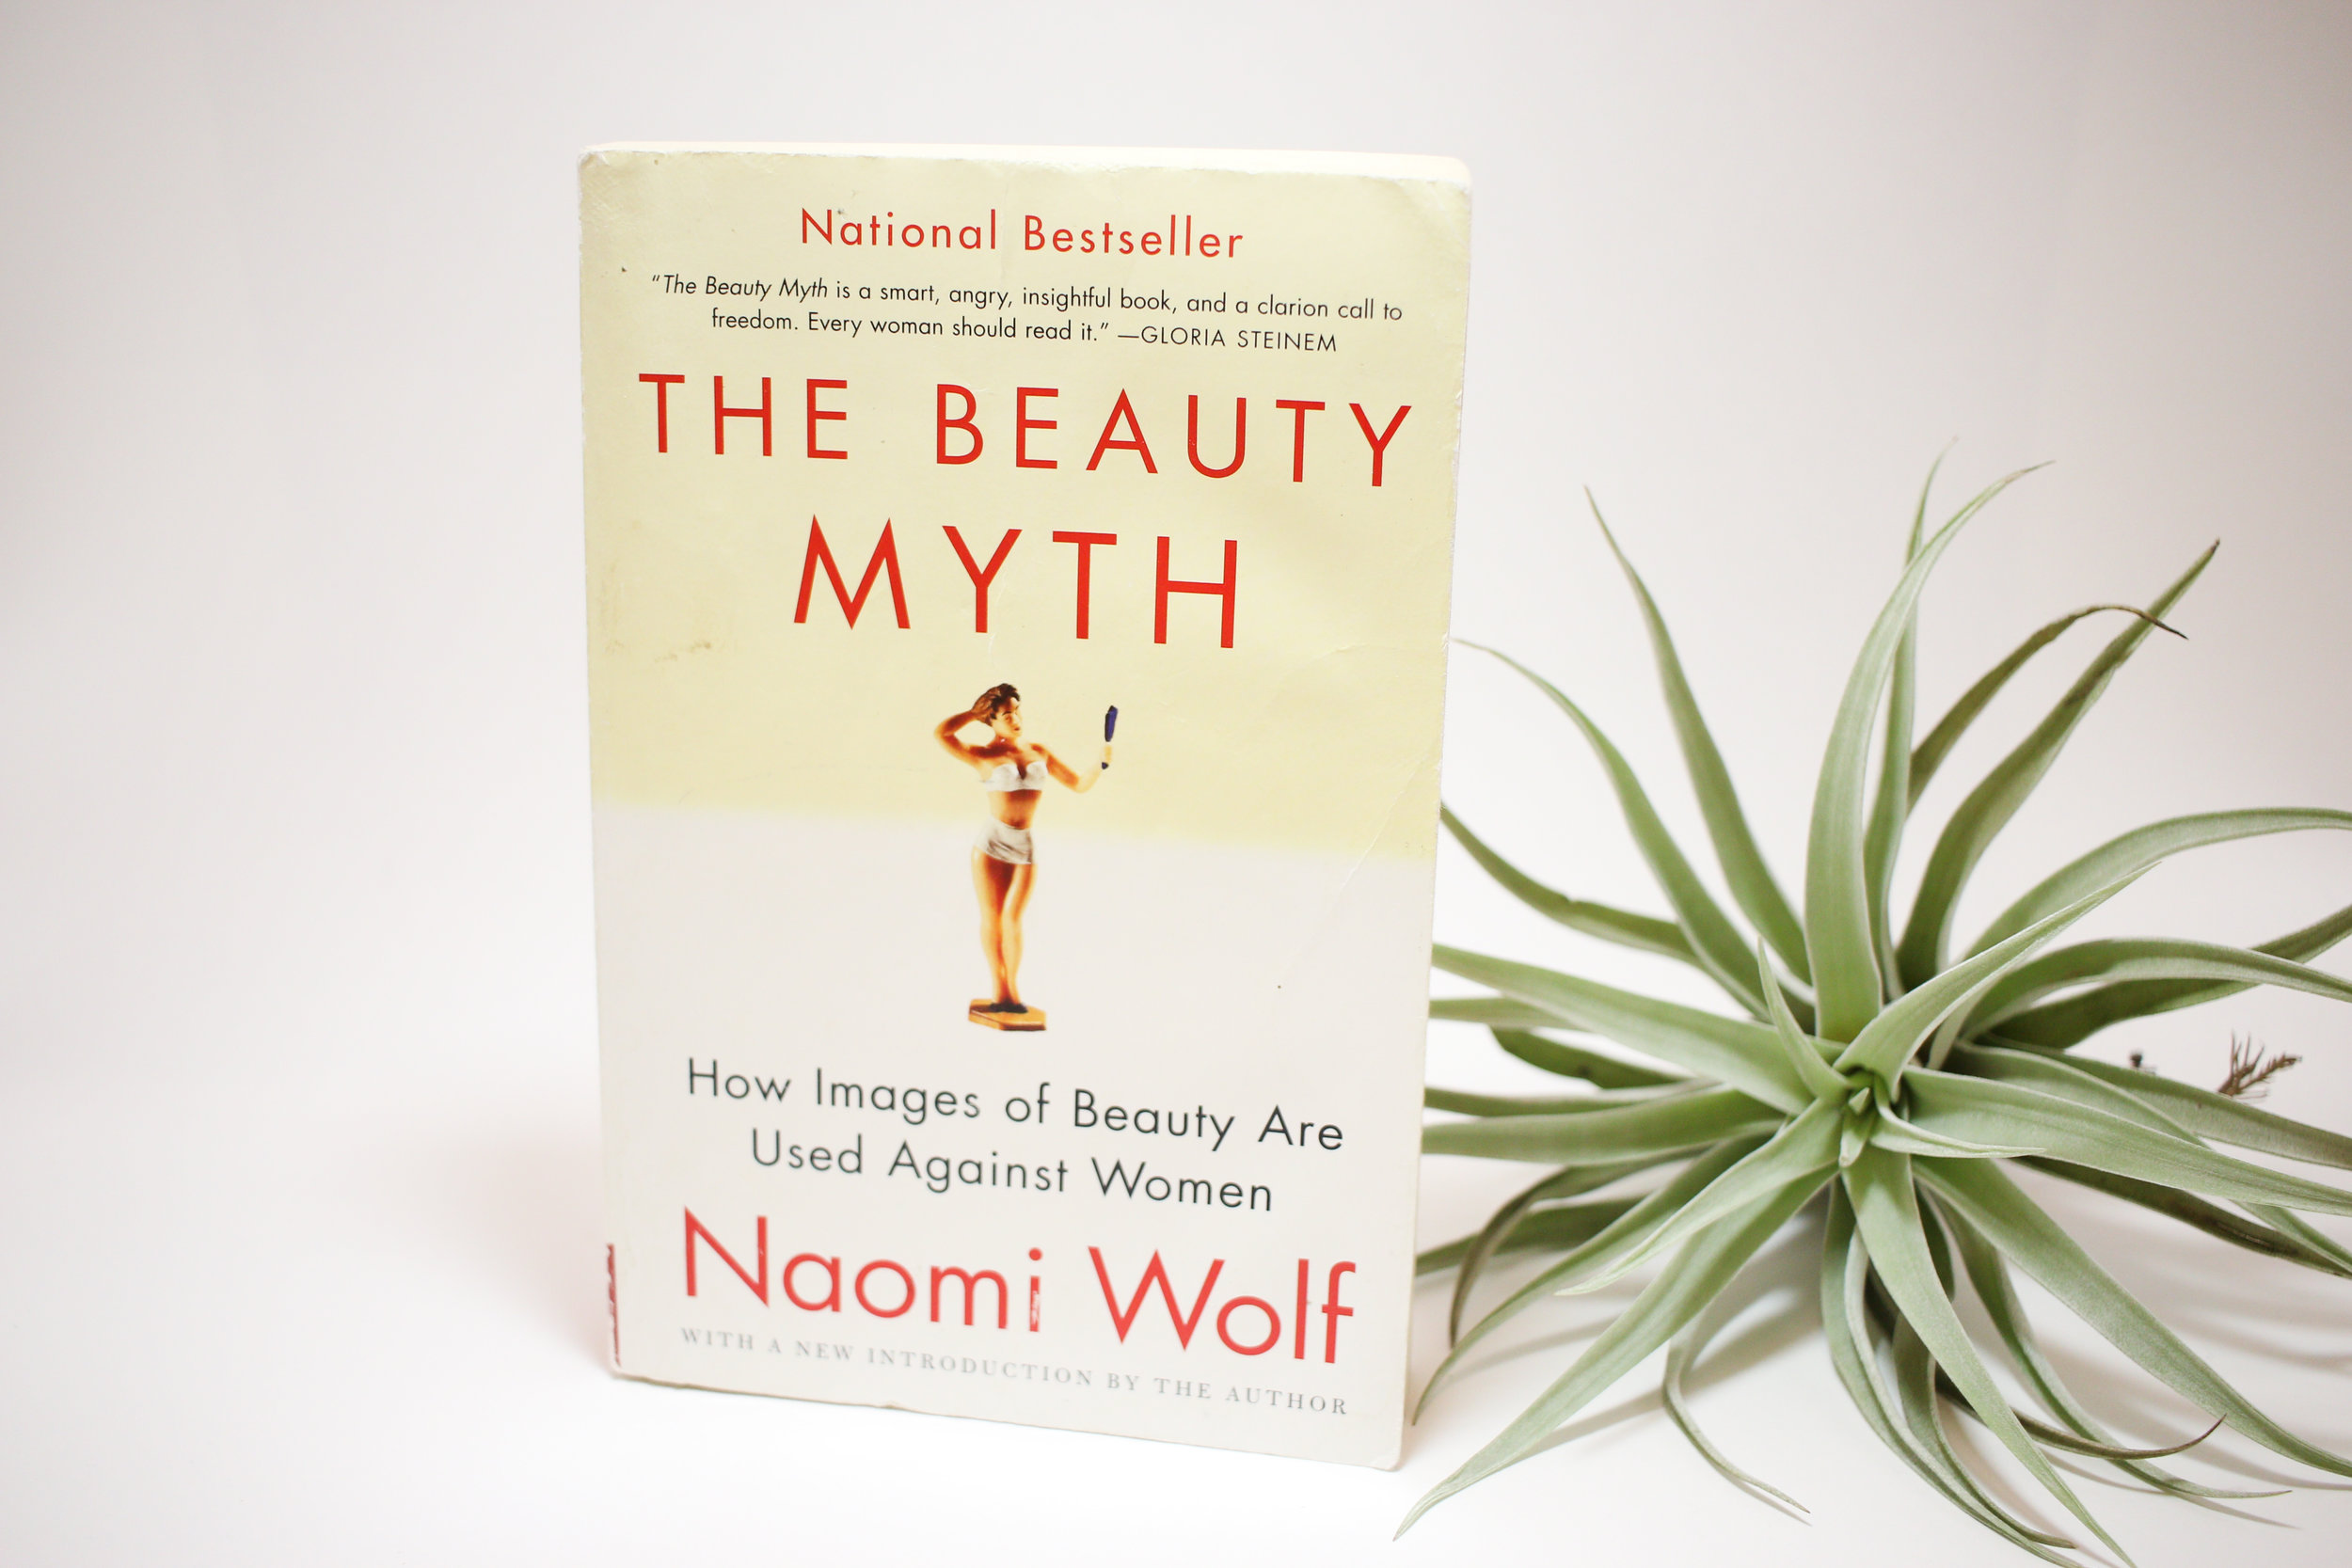 "The Beauty Myth" by Naomi Wolf